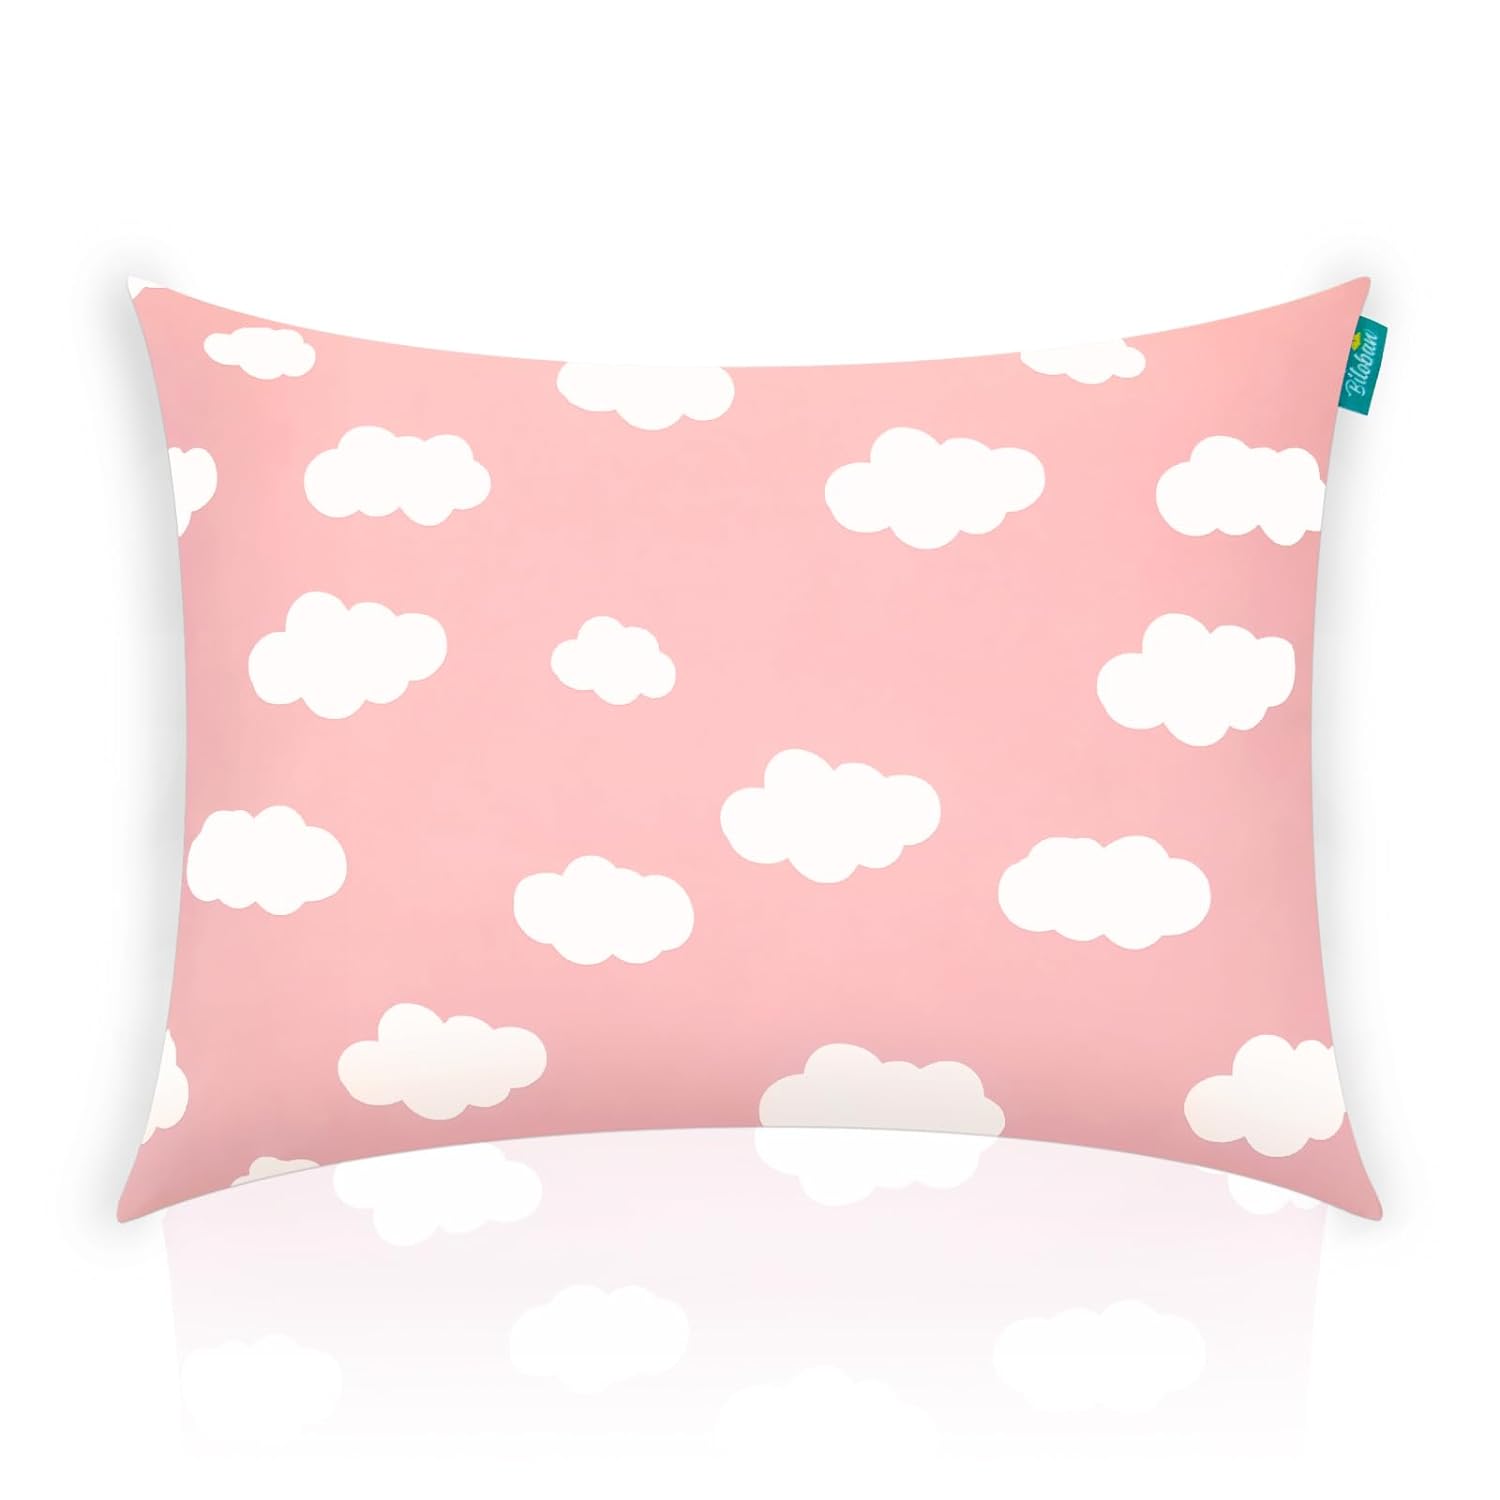 Toddler Pillow - 14" x 19”, Multi-Use, Soft & Skin-Friendly, Pink Cloud - Biloban Online Store